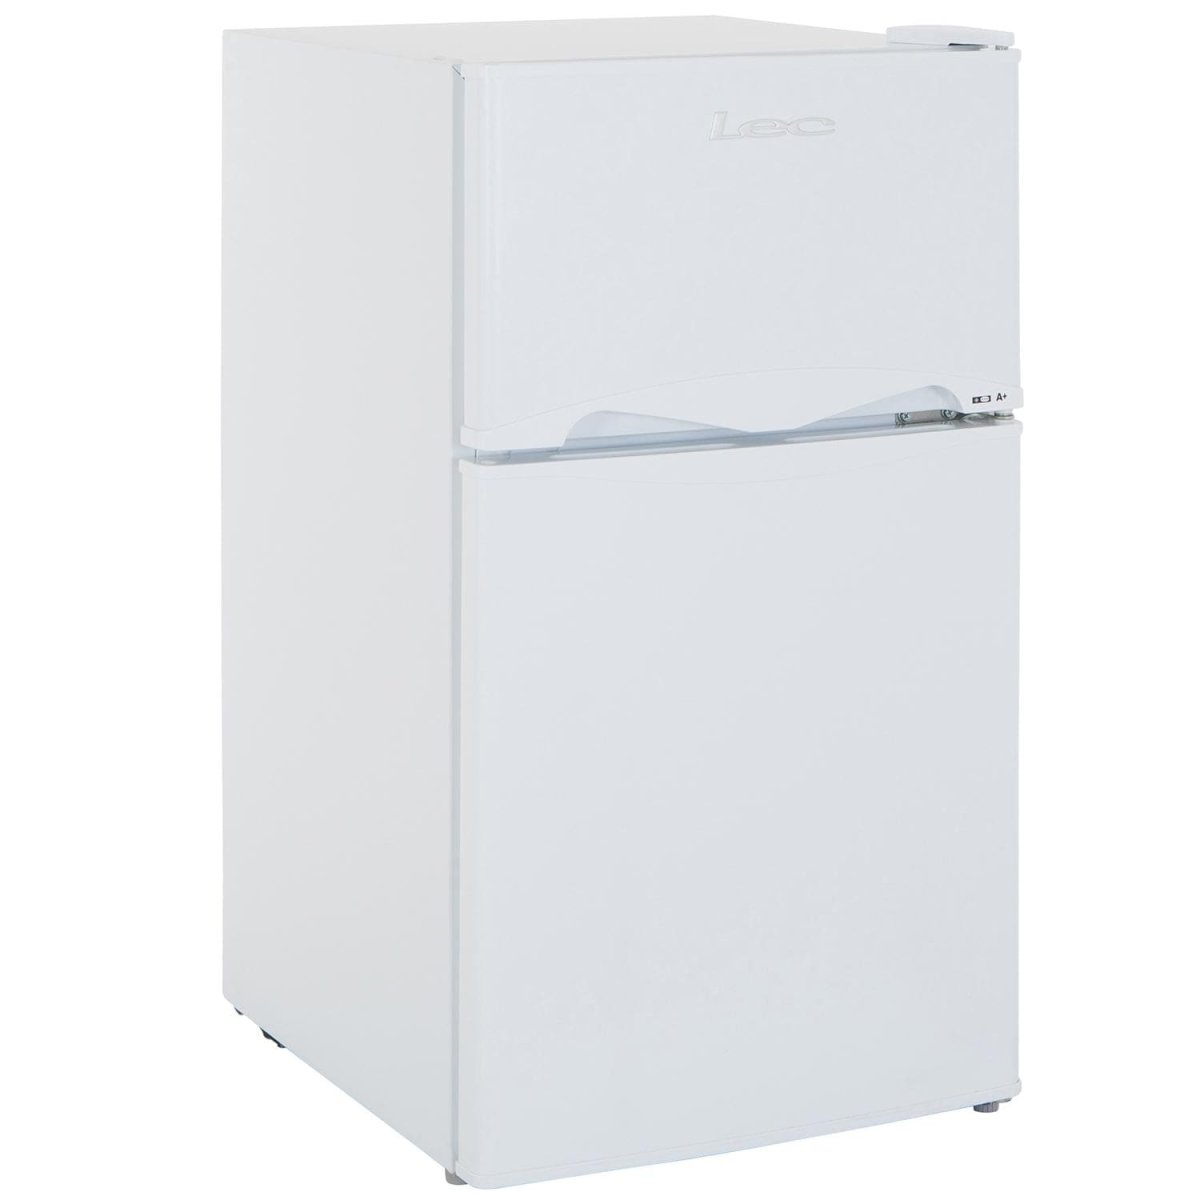 Lec T50084W 50cm Undercounter Manual Defrost Fridge Freezer - White | Atlantic Electrics